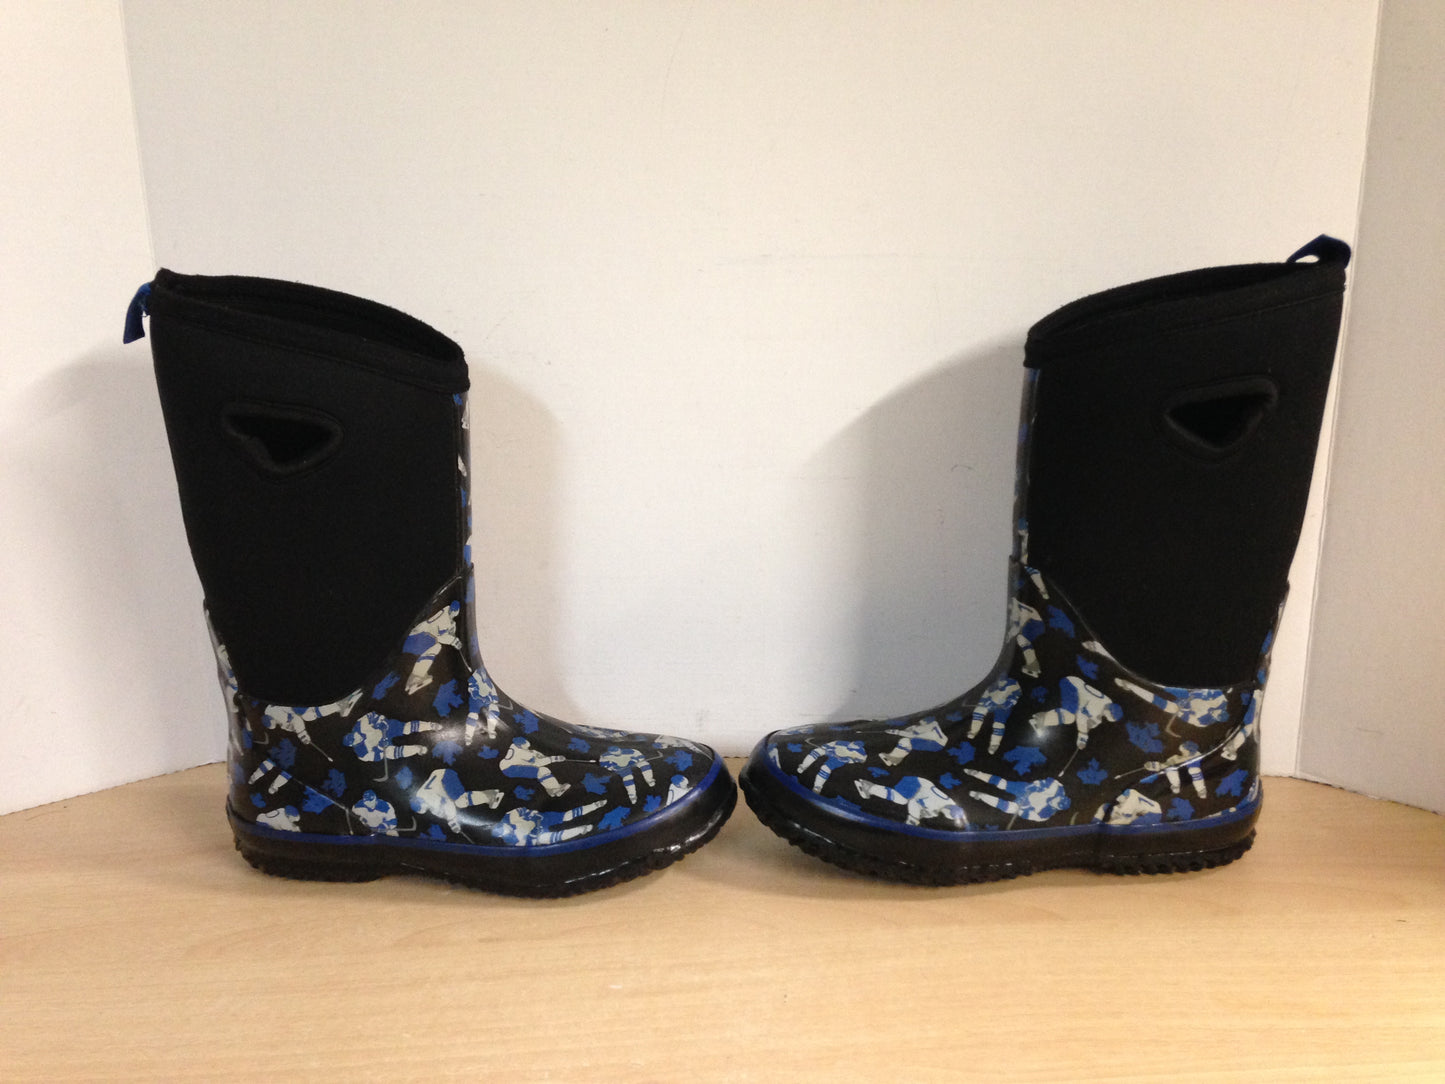 Bogs Style Child Size 4 Storm Neoprene Rubber Rain Winter Boots Waterproof Black Blue Hockey Excellent